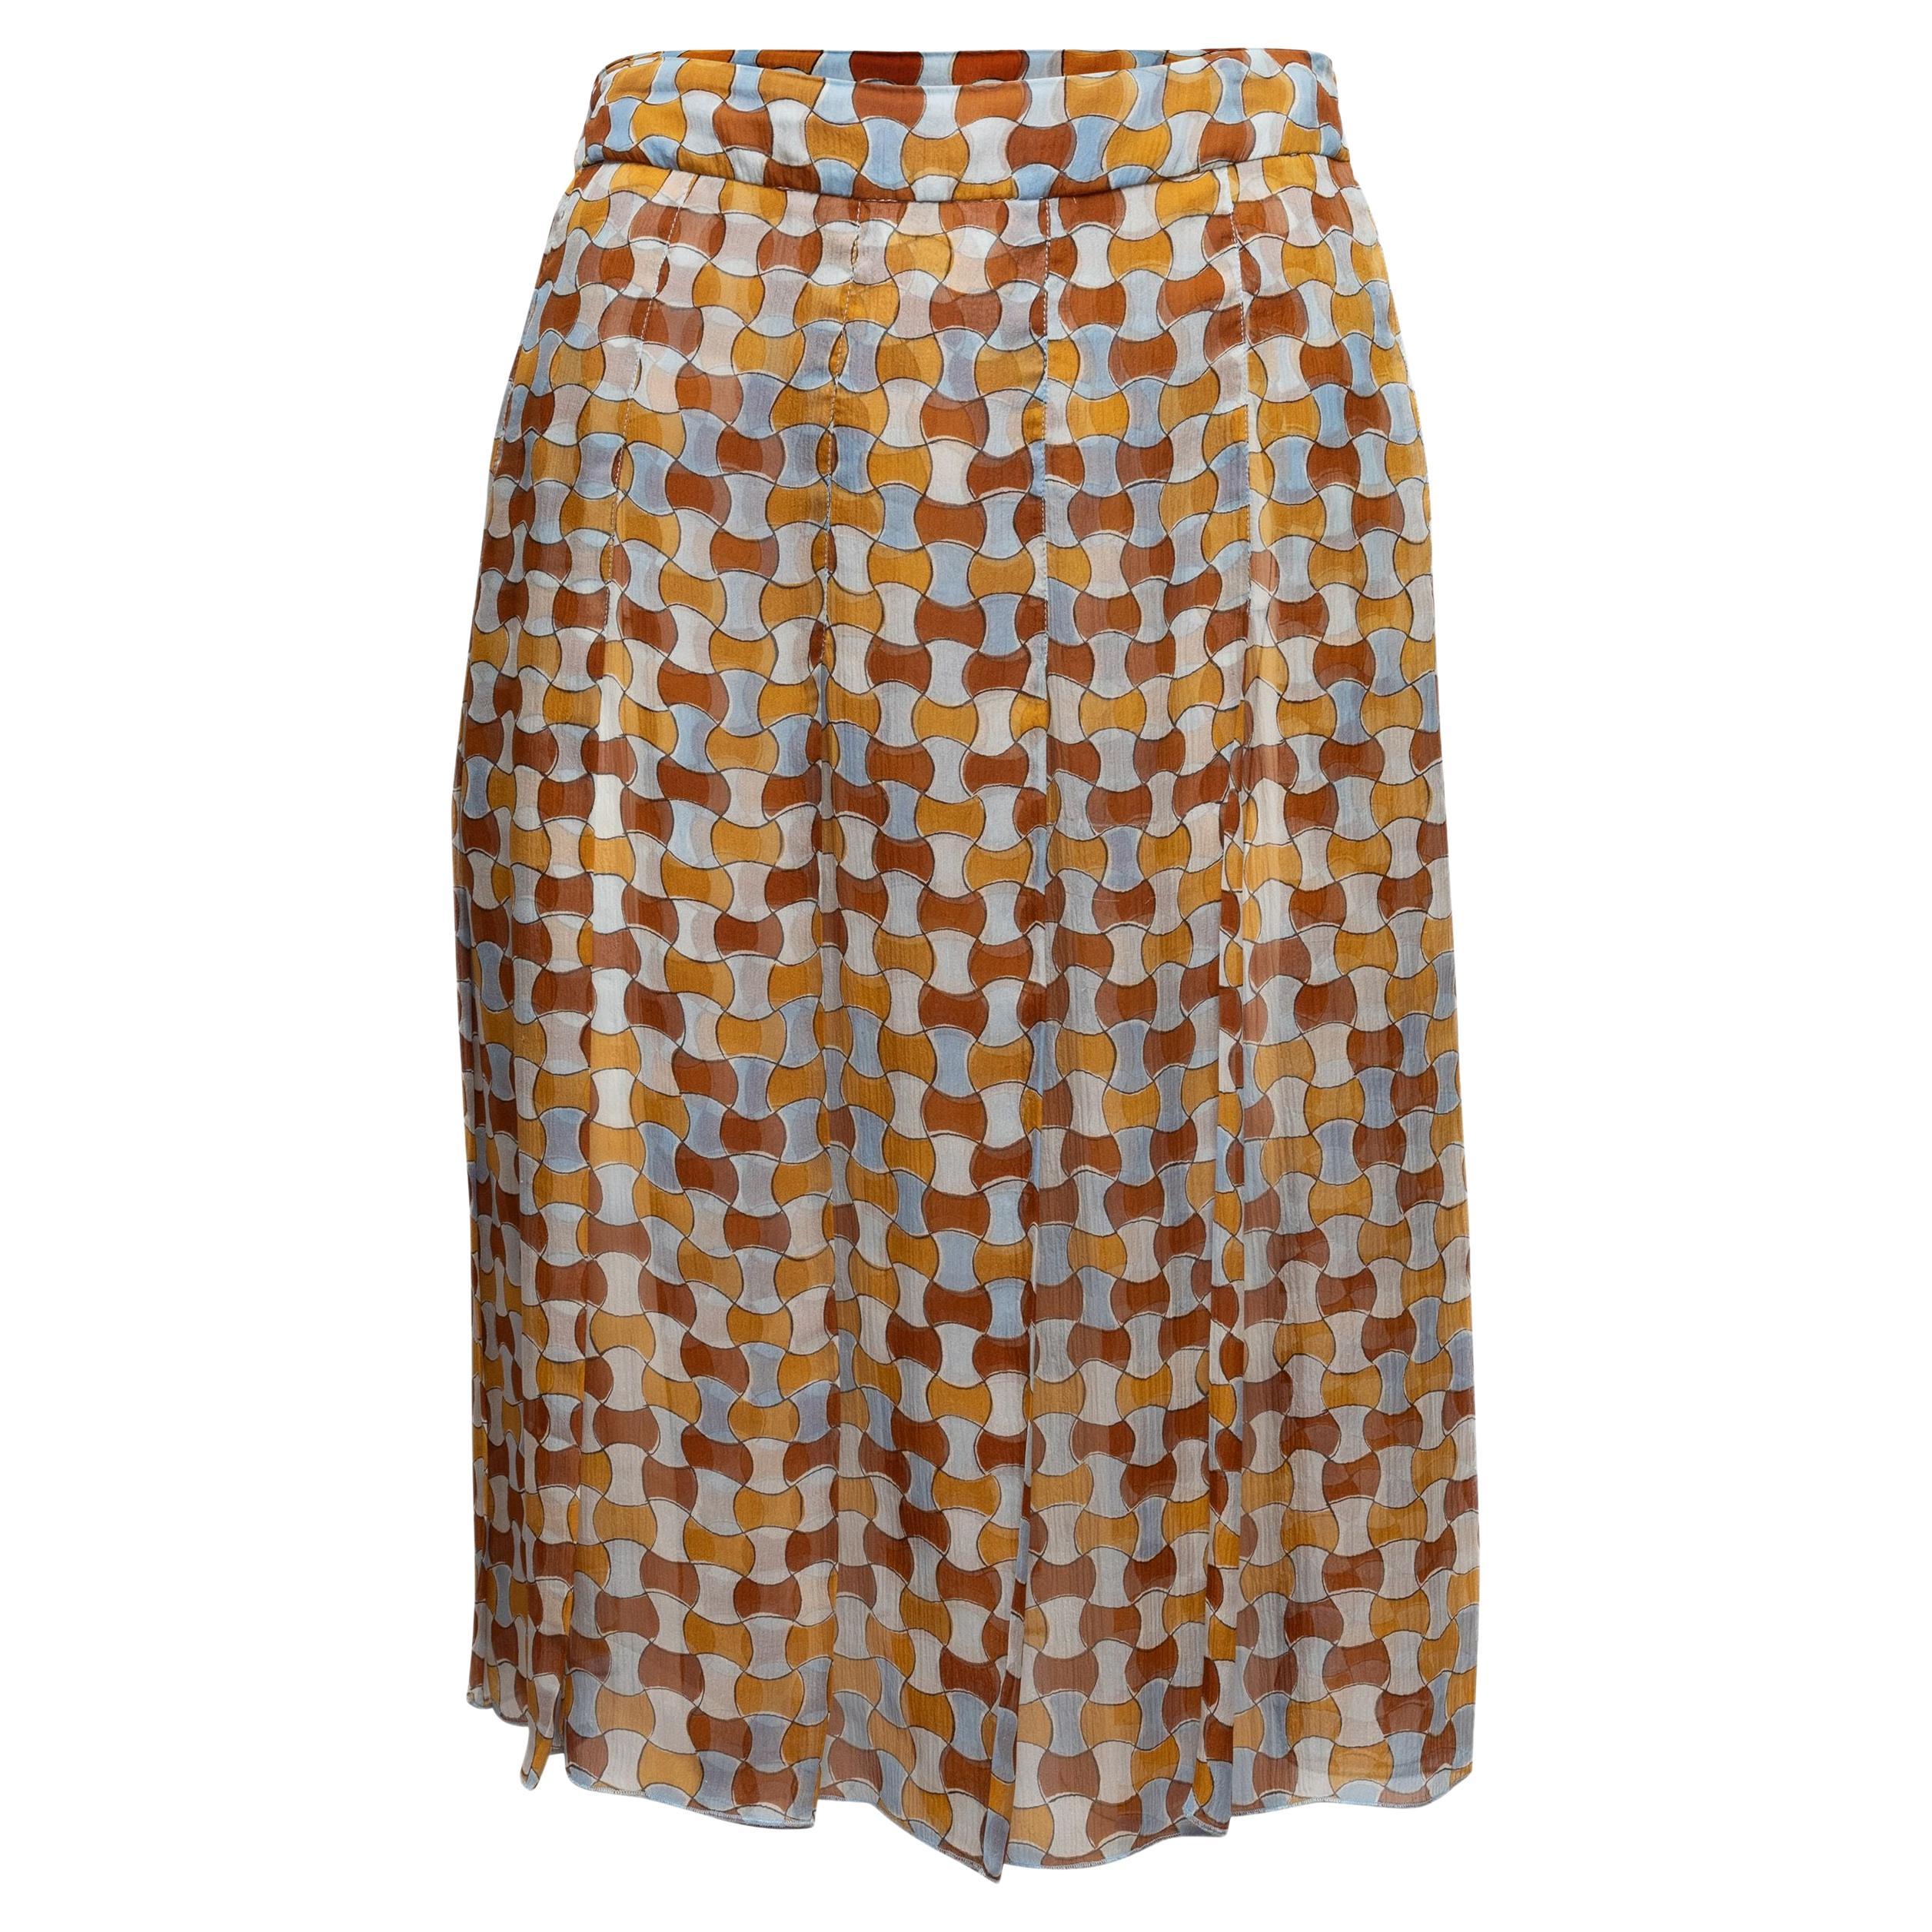 Prada Vintage 1990s silk chiffon mosaic skirt